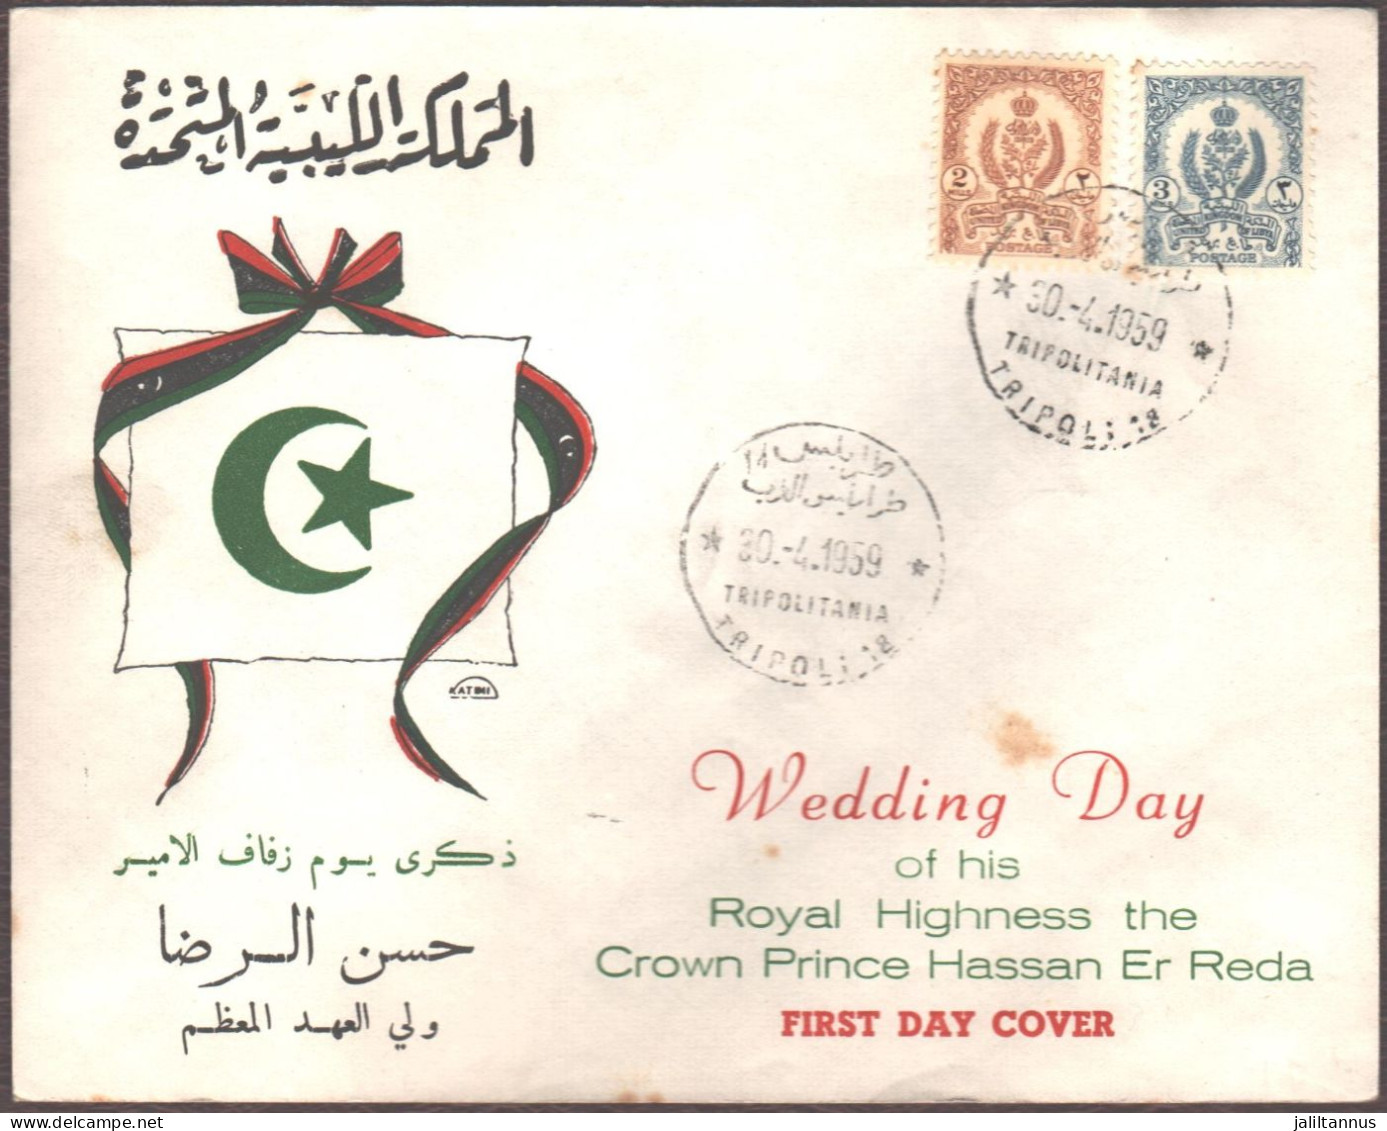 FDC  -UNITED KINGDOM OF LIBYA -  WEDDING DAY OF HIS ROYAL HIGHNESS THE CROWN PRINCE HASSAN ER REDA 1959 - Libië